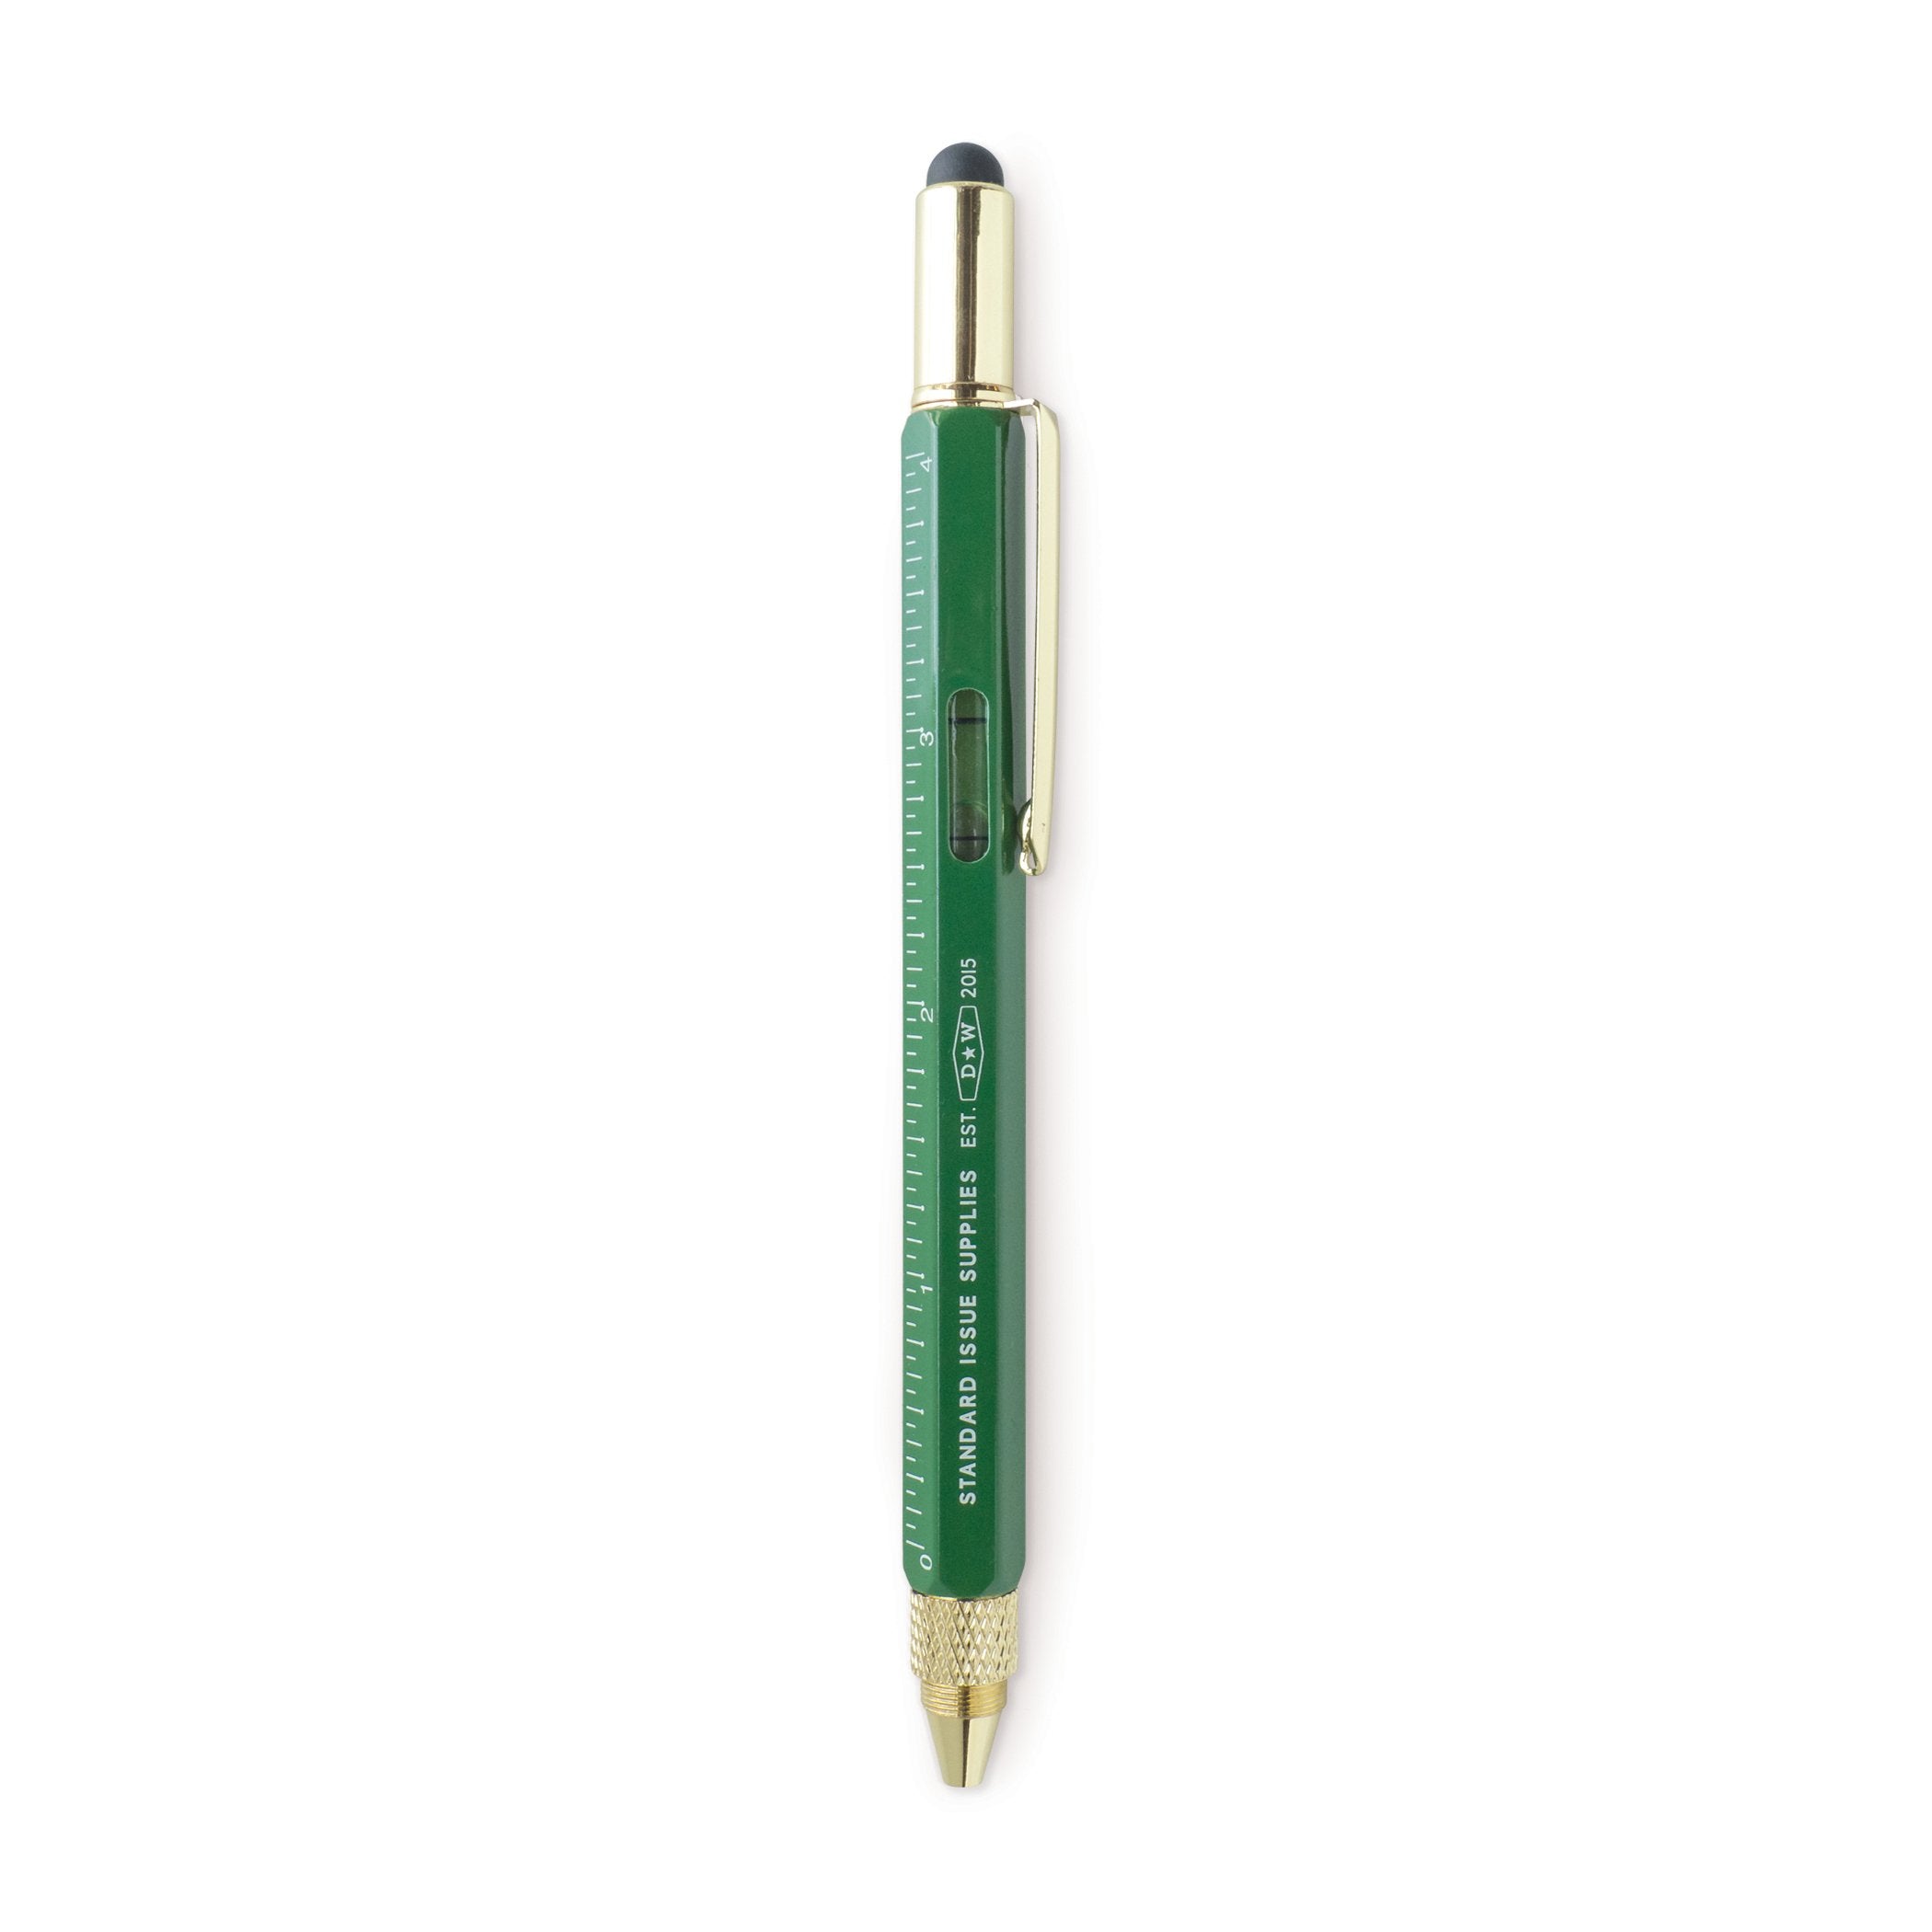 Pix Multi Tool - Standard Issue Tool Pen - Scout Green | DesignWorks Ink